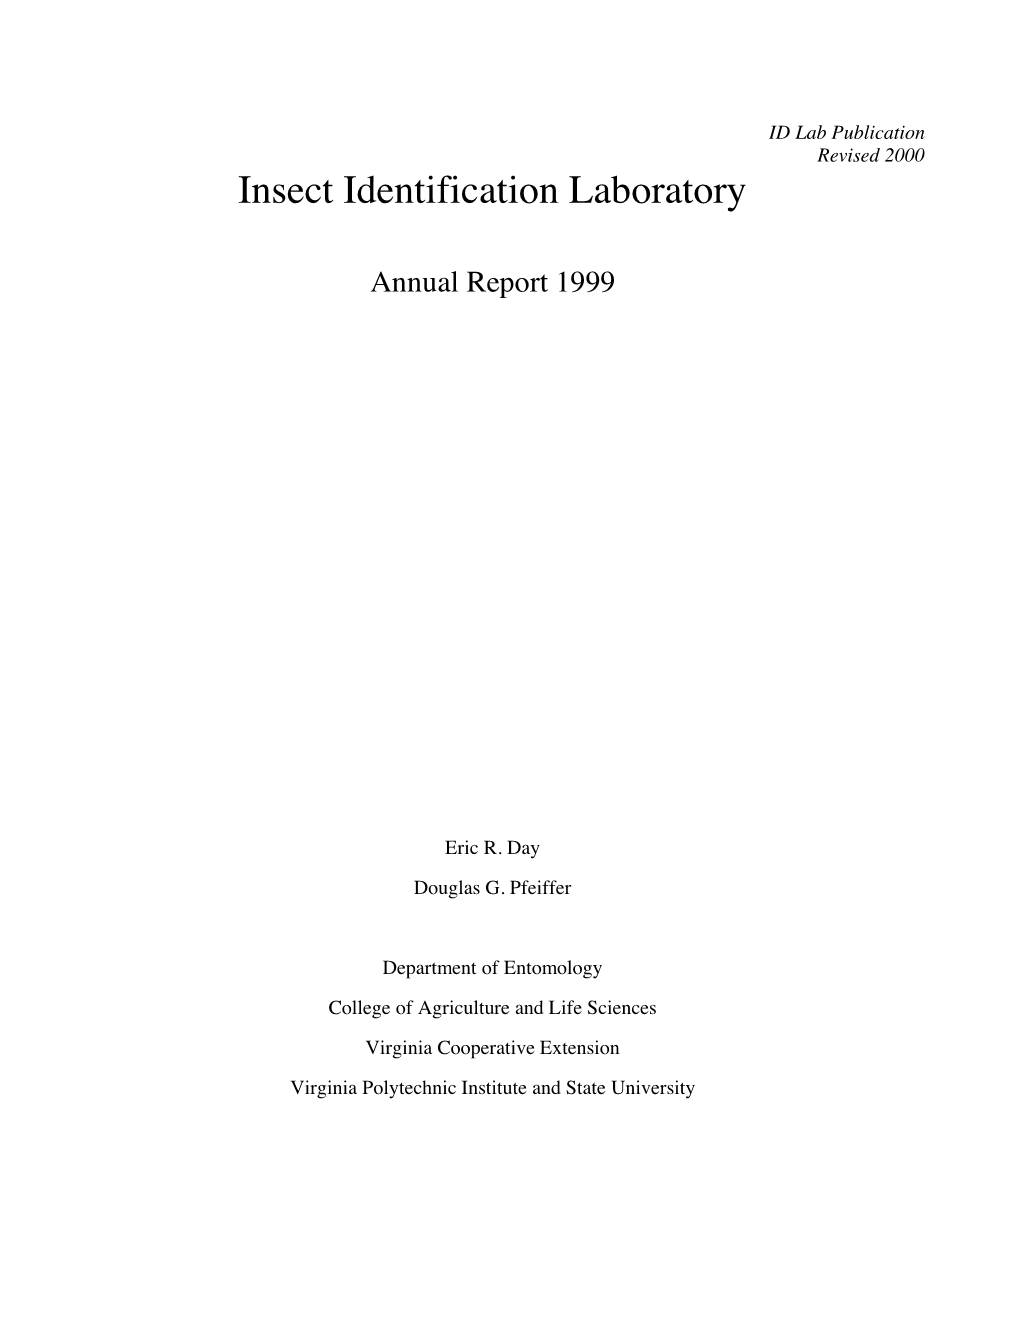 Insect Identification Laboratory